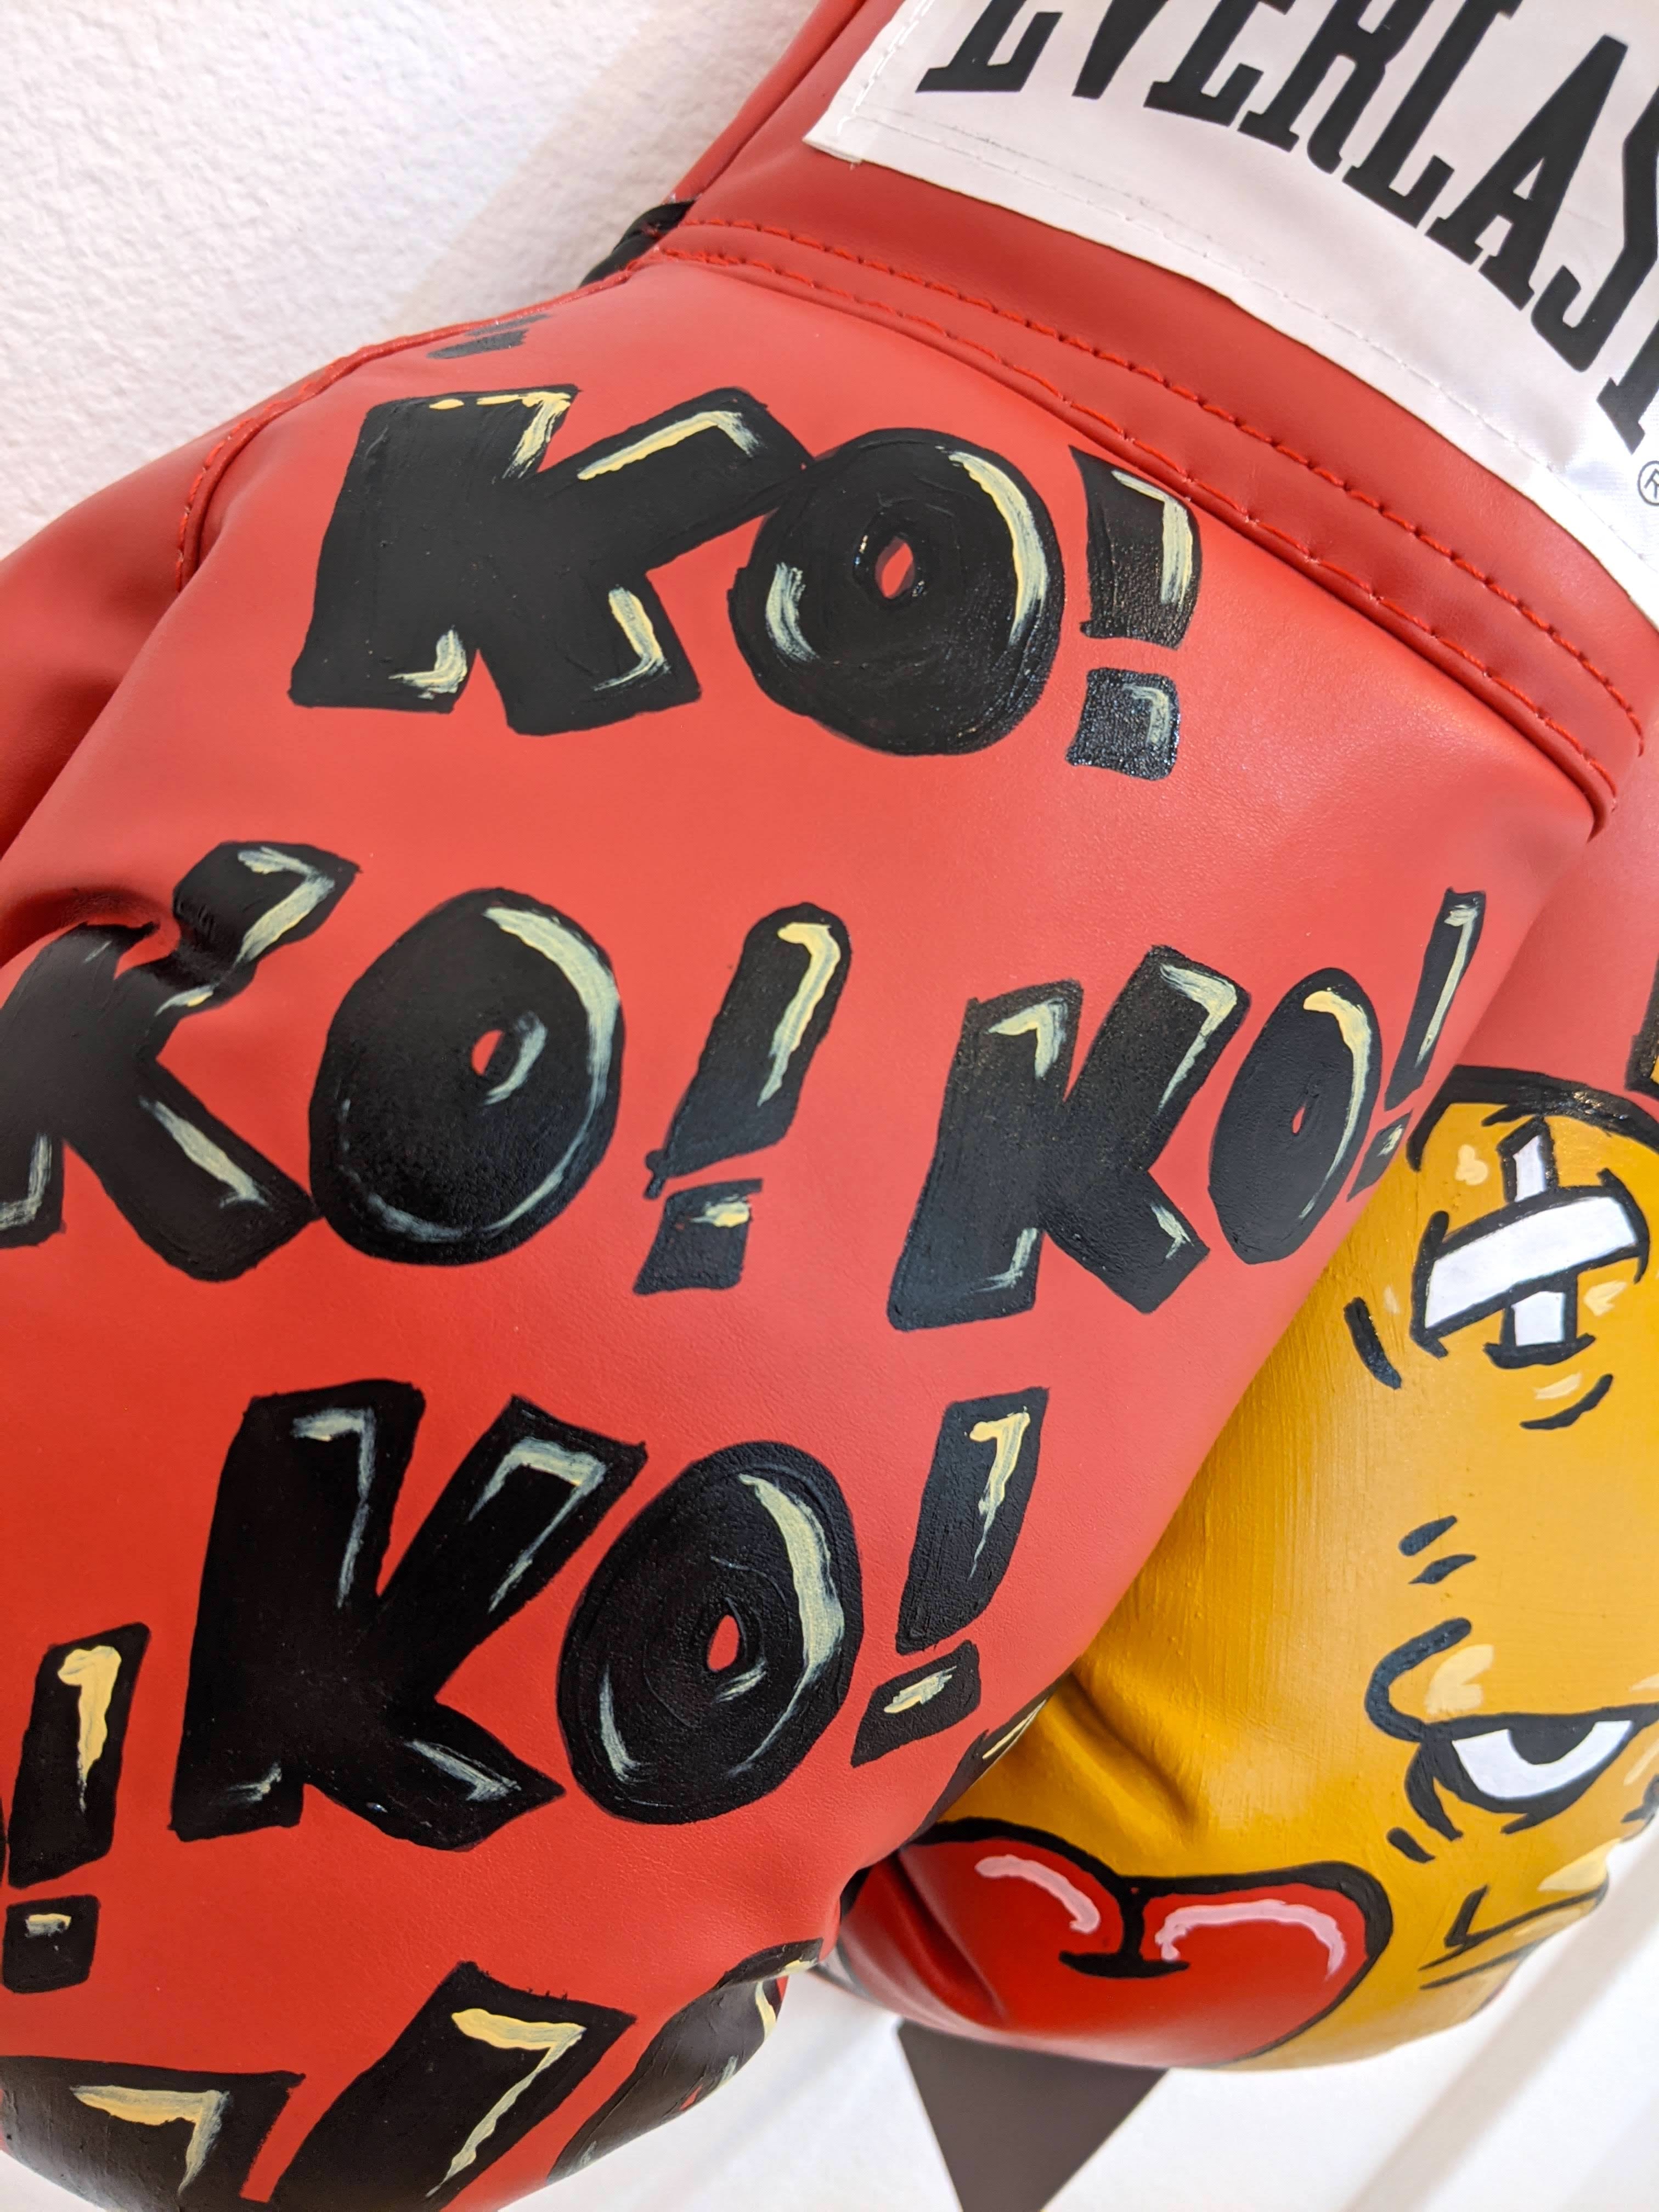 "KO KO KO" Boxing Gloves by JC Rivera